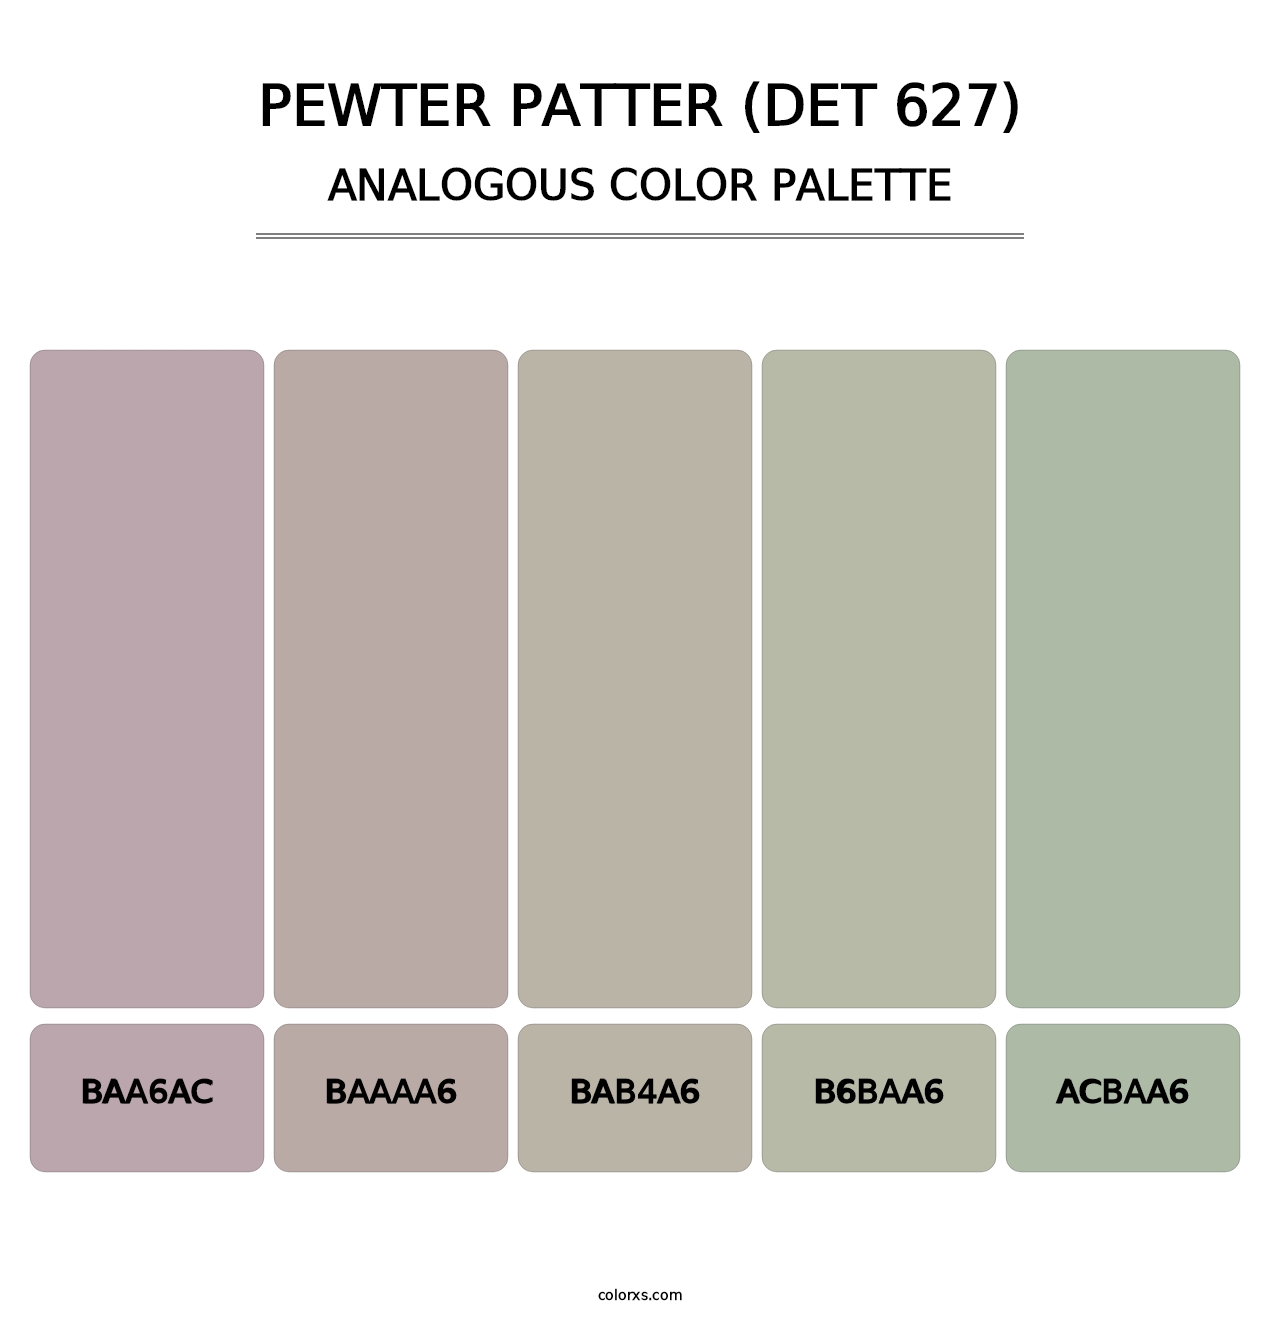 Pewter Patter (DET 627) - Analogous Color Palette